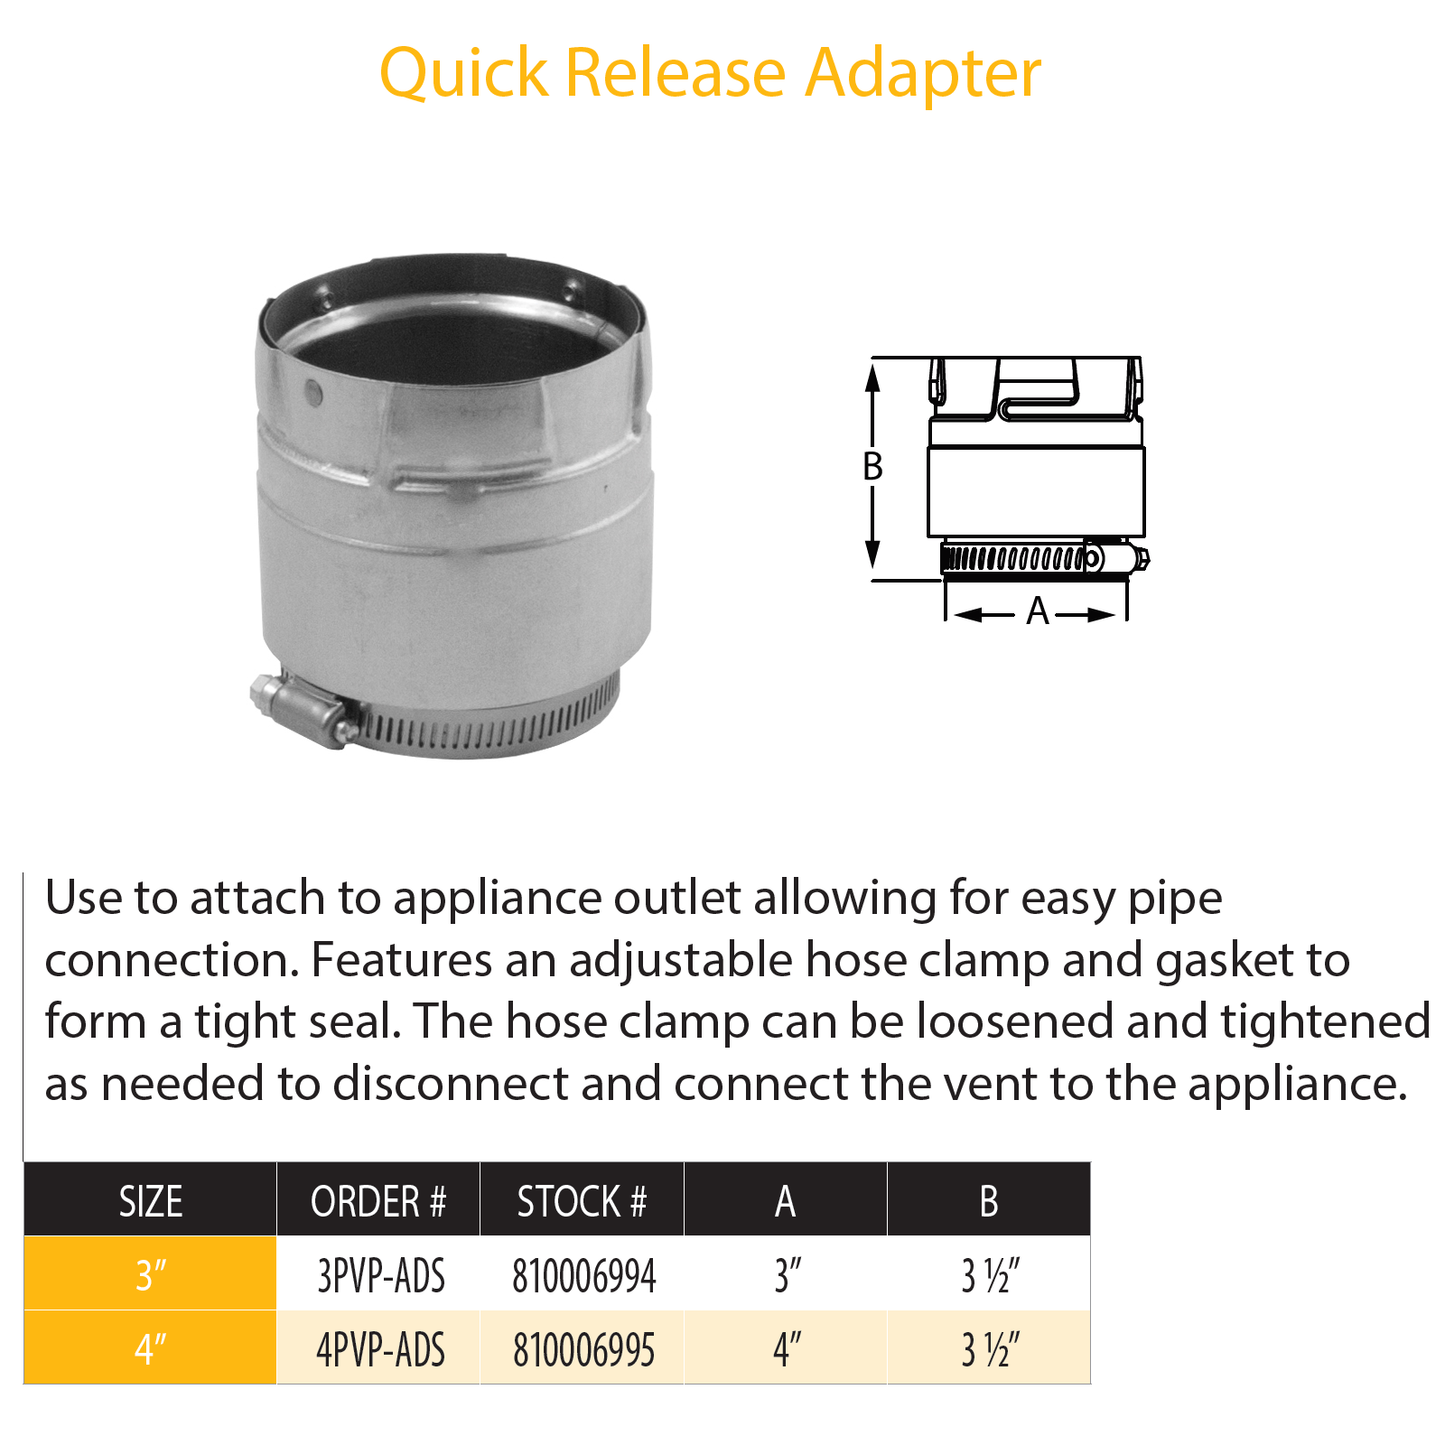 DuraVent Pellet Vent Pro Quick Release Adapter | 3PVP-ADS